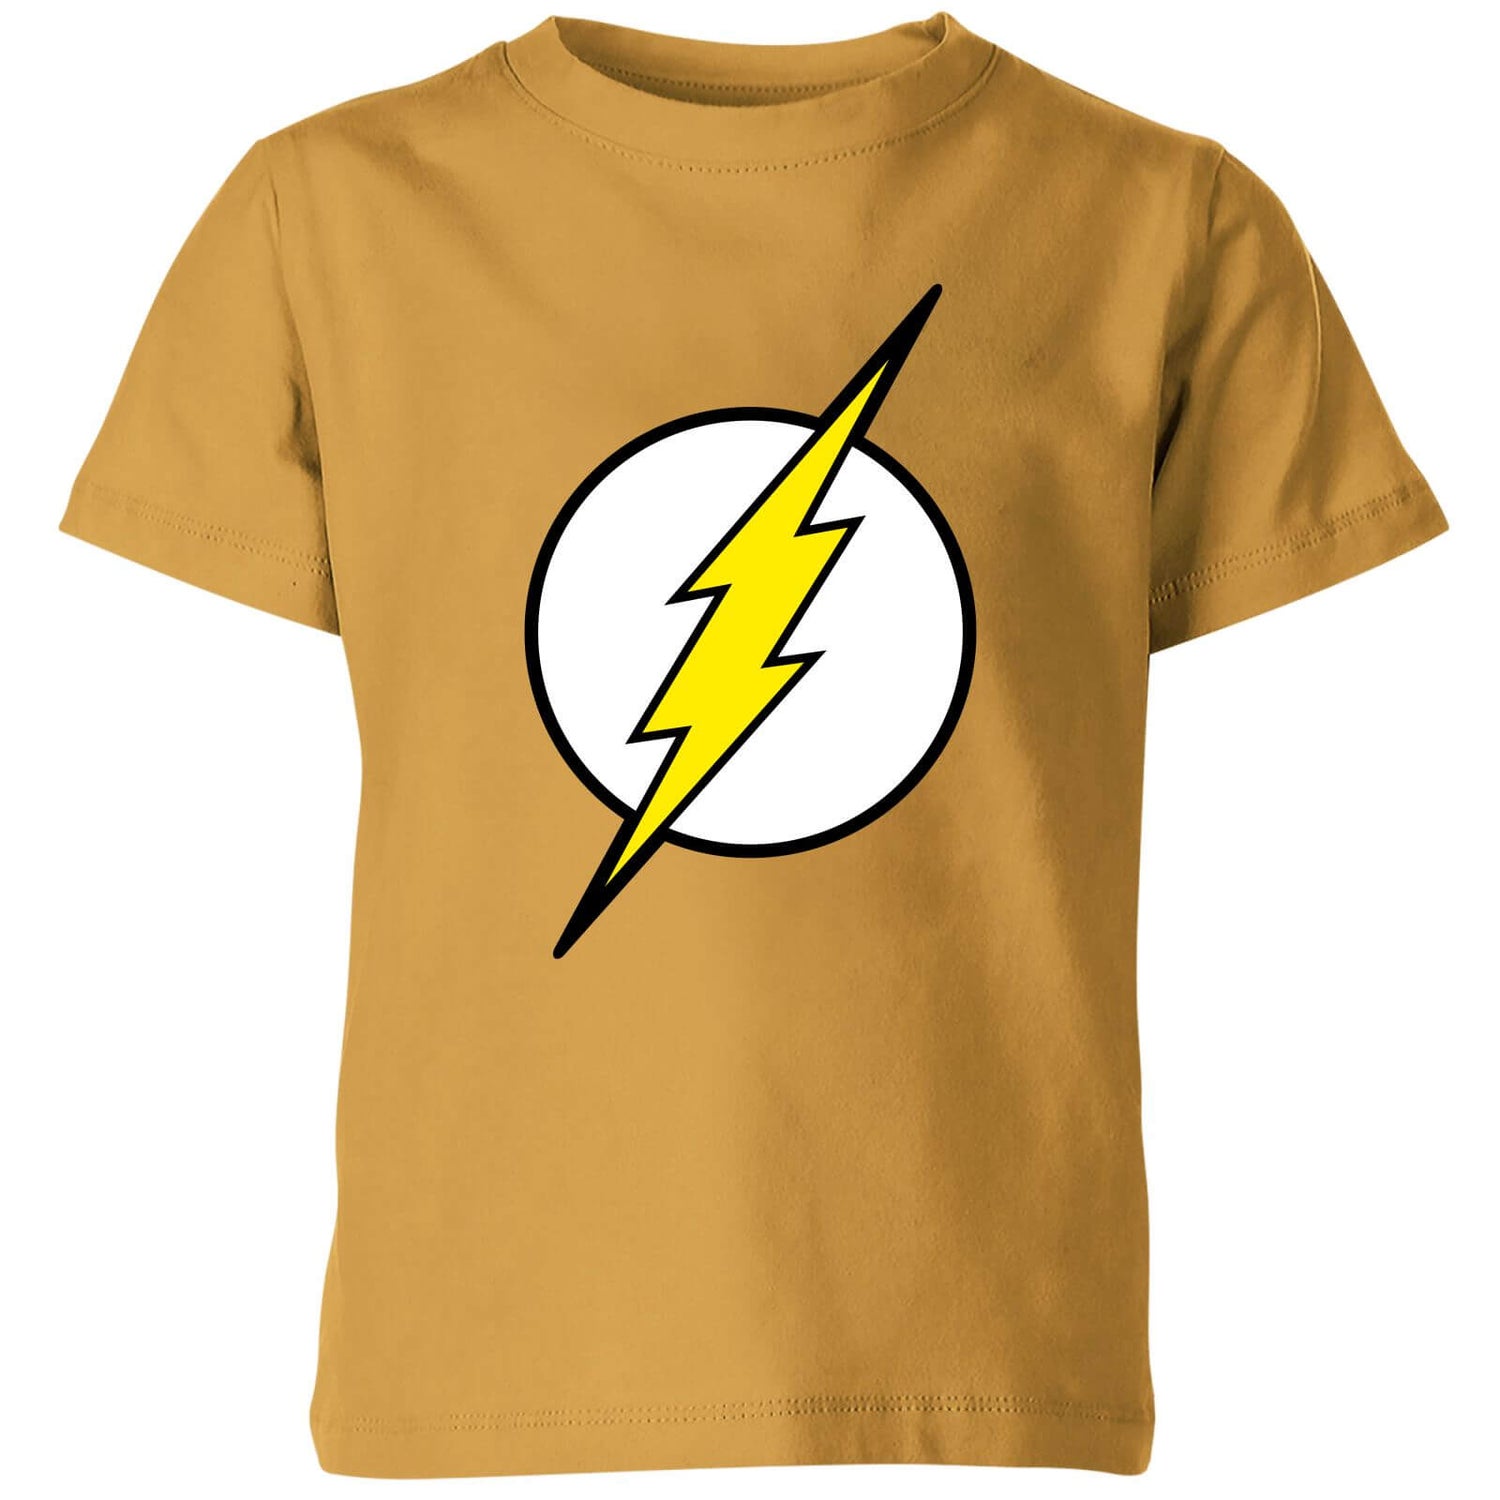 Justice League Flash Logo Kids' T-Shirt - Mustard